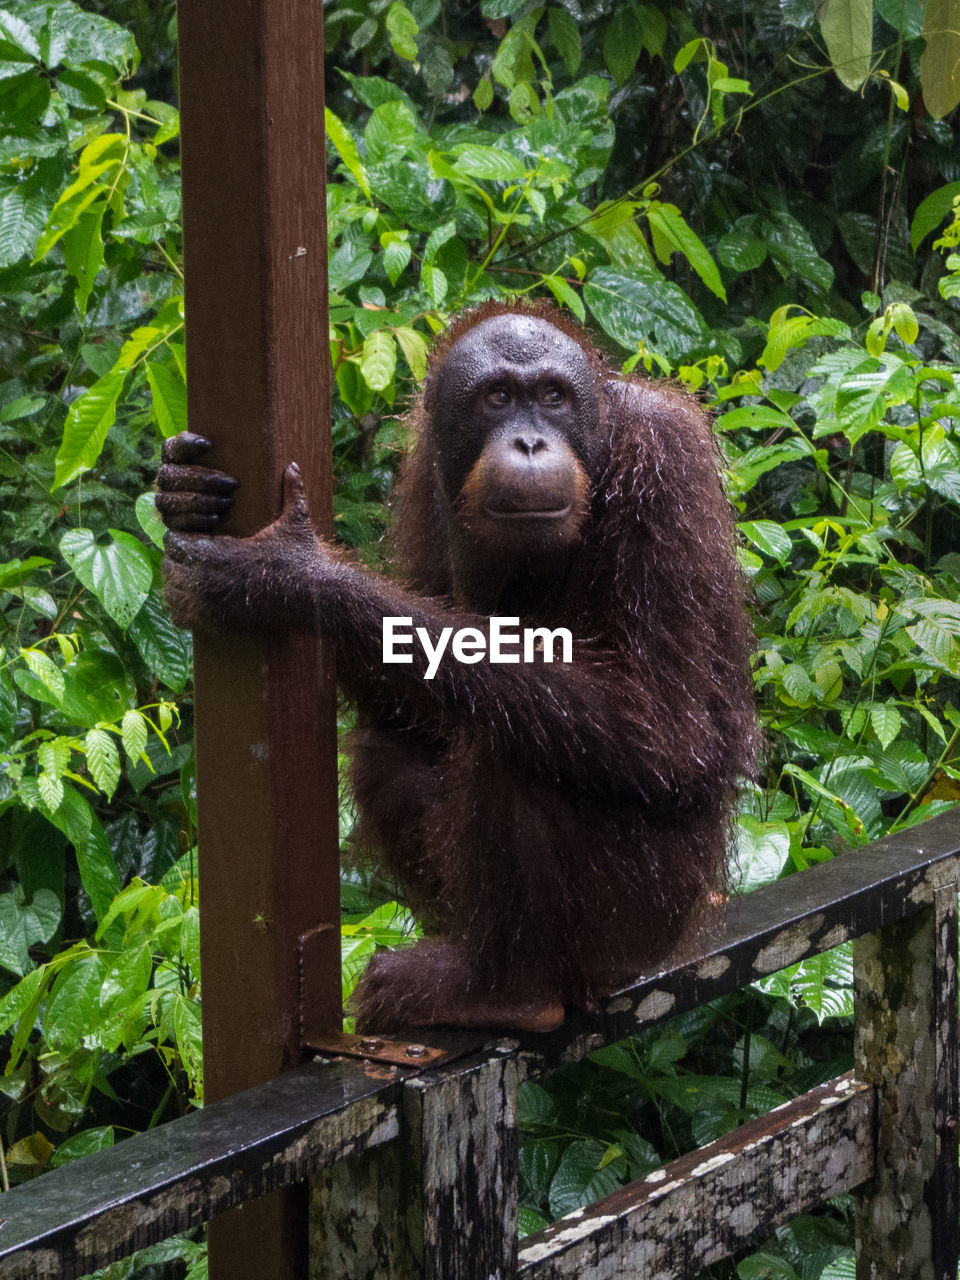 Orangutan in borneo jungle